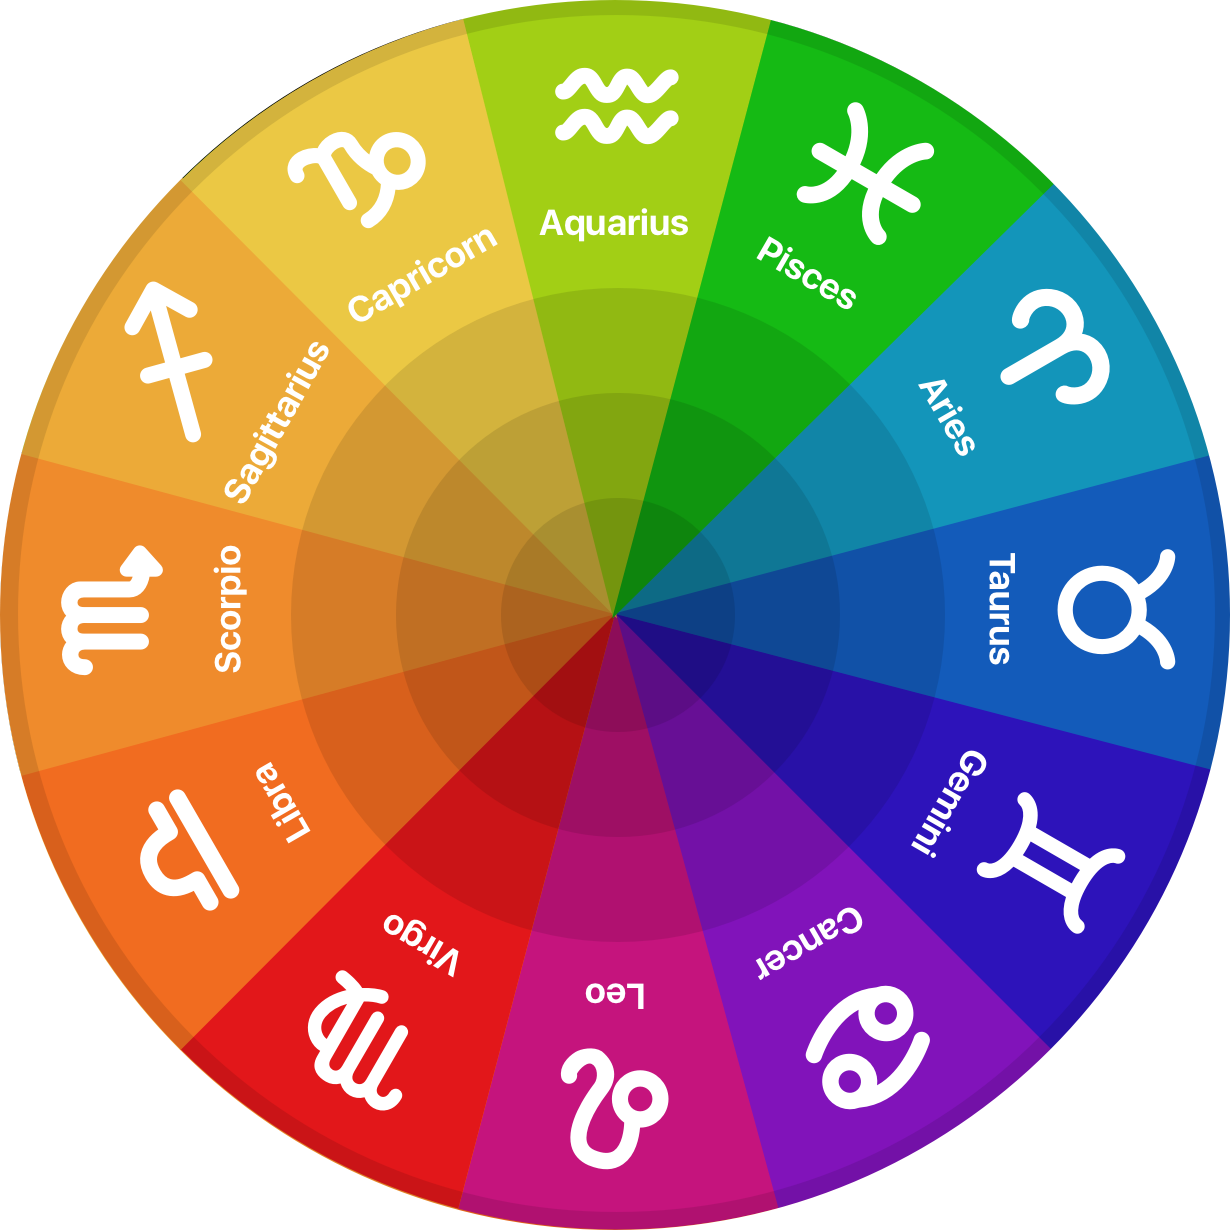 Zodiac Signs Wheel